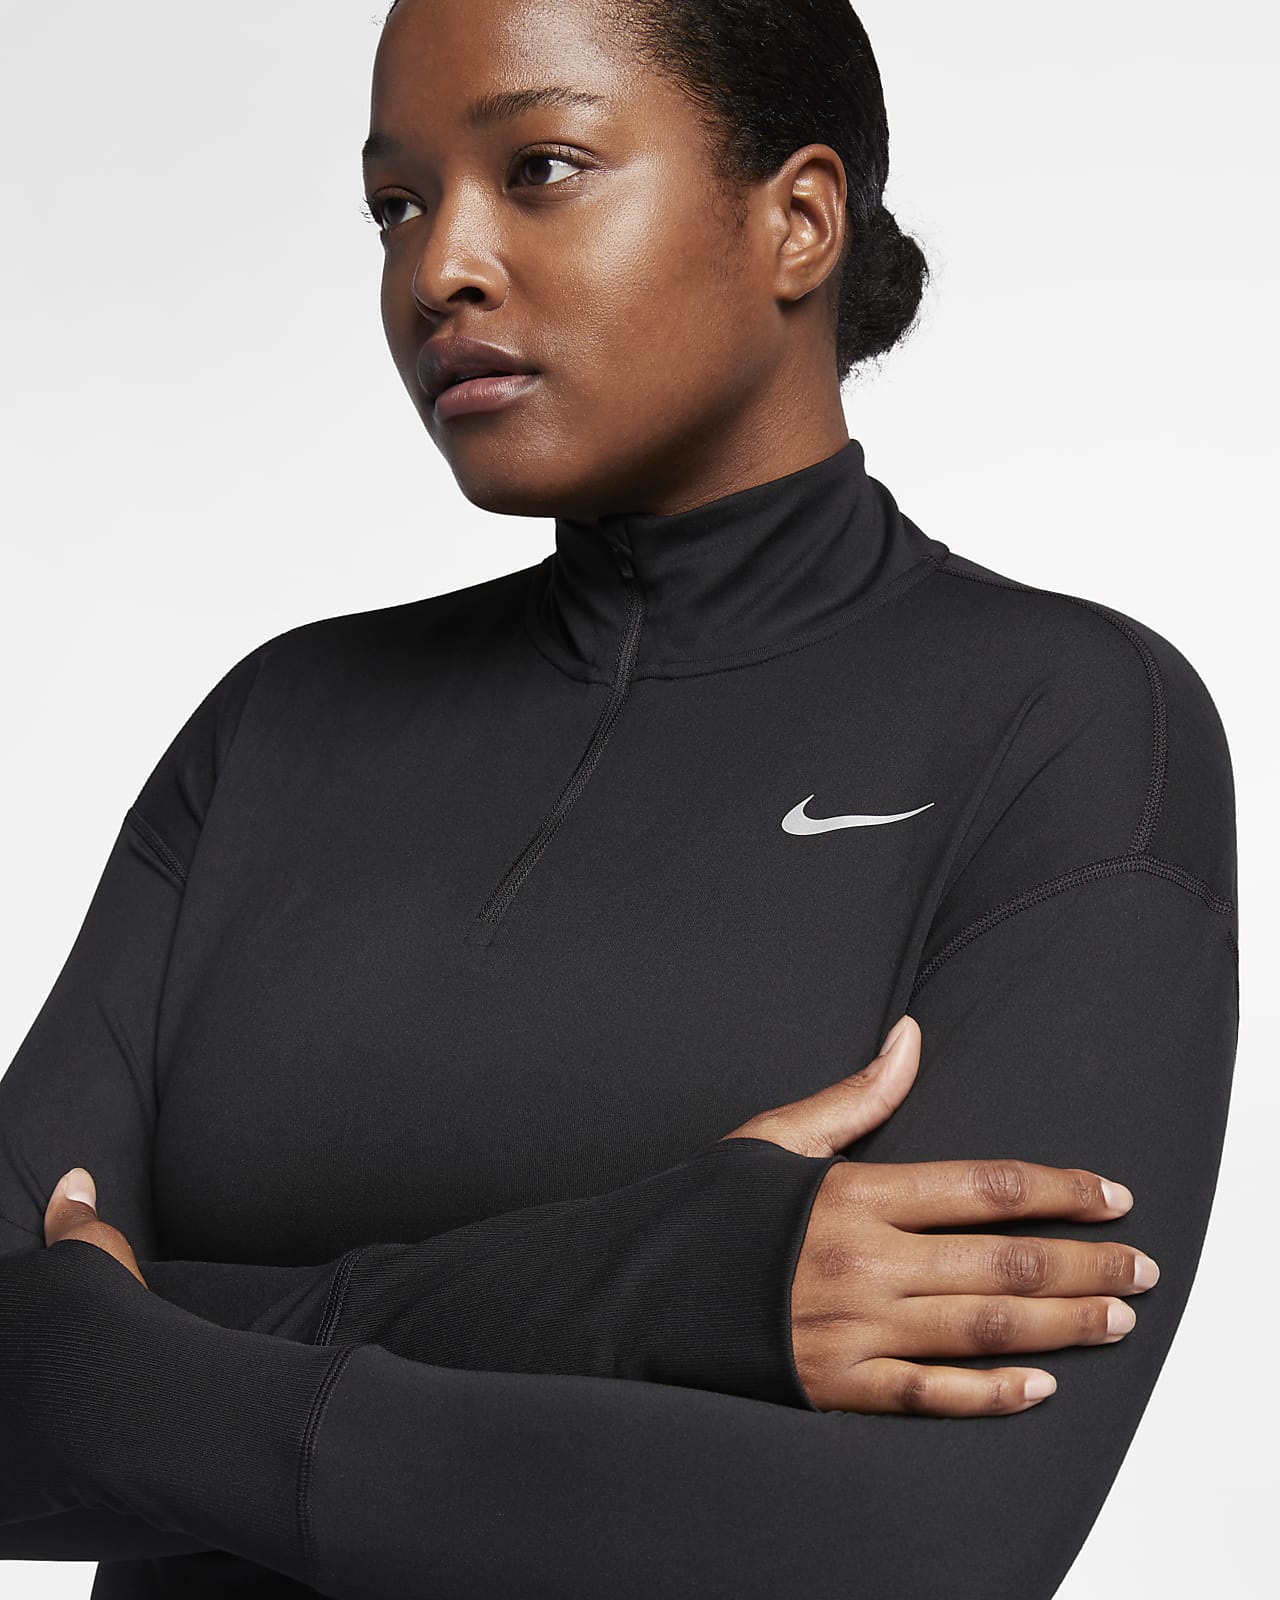 Tochi træ Perennial Agent Nike Element Women's Running Top (Plus). Nike.com